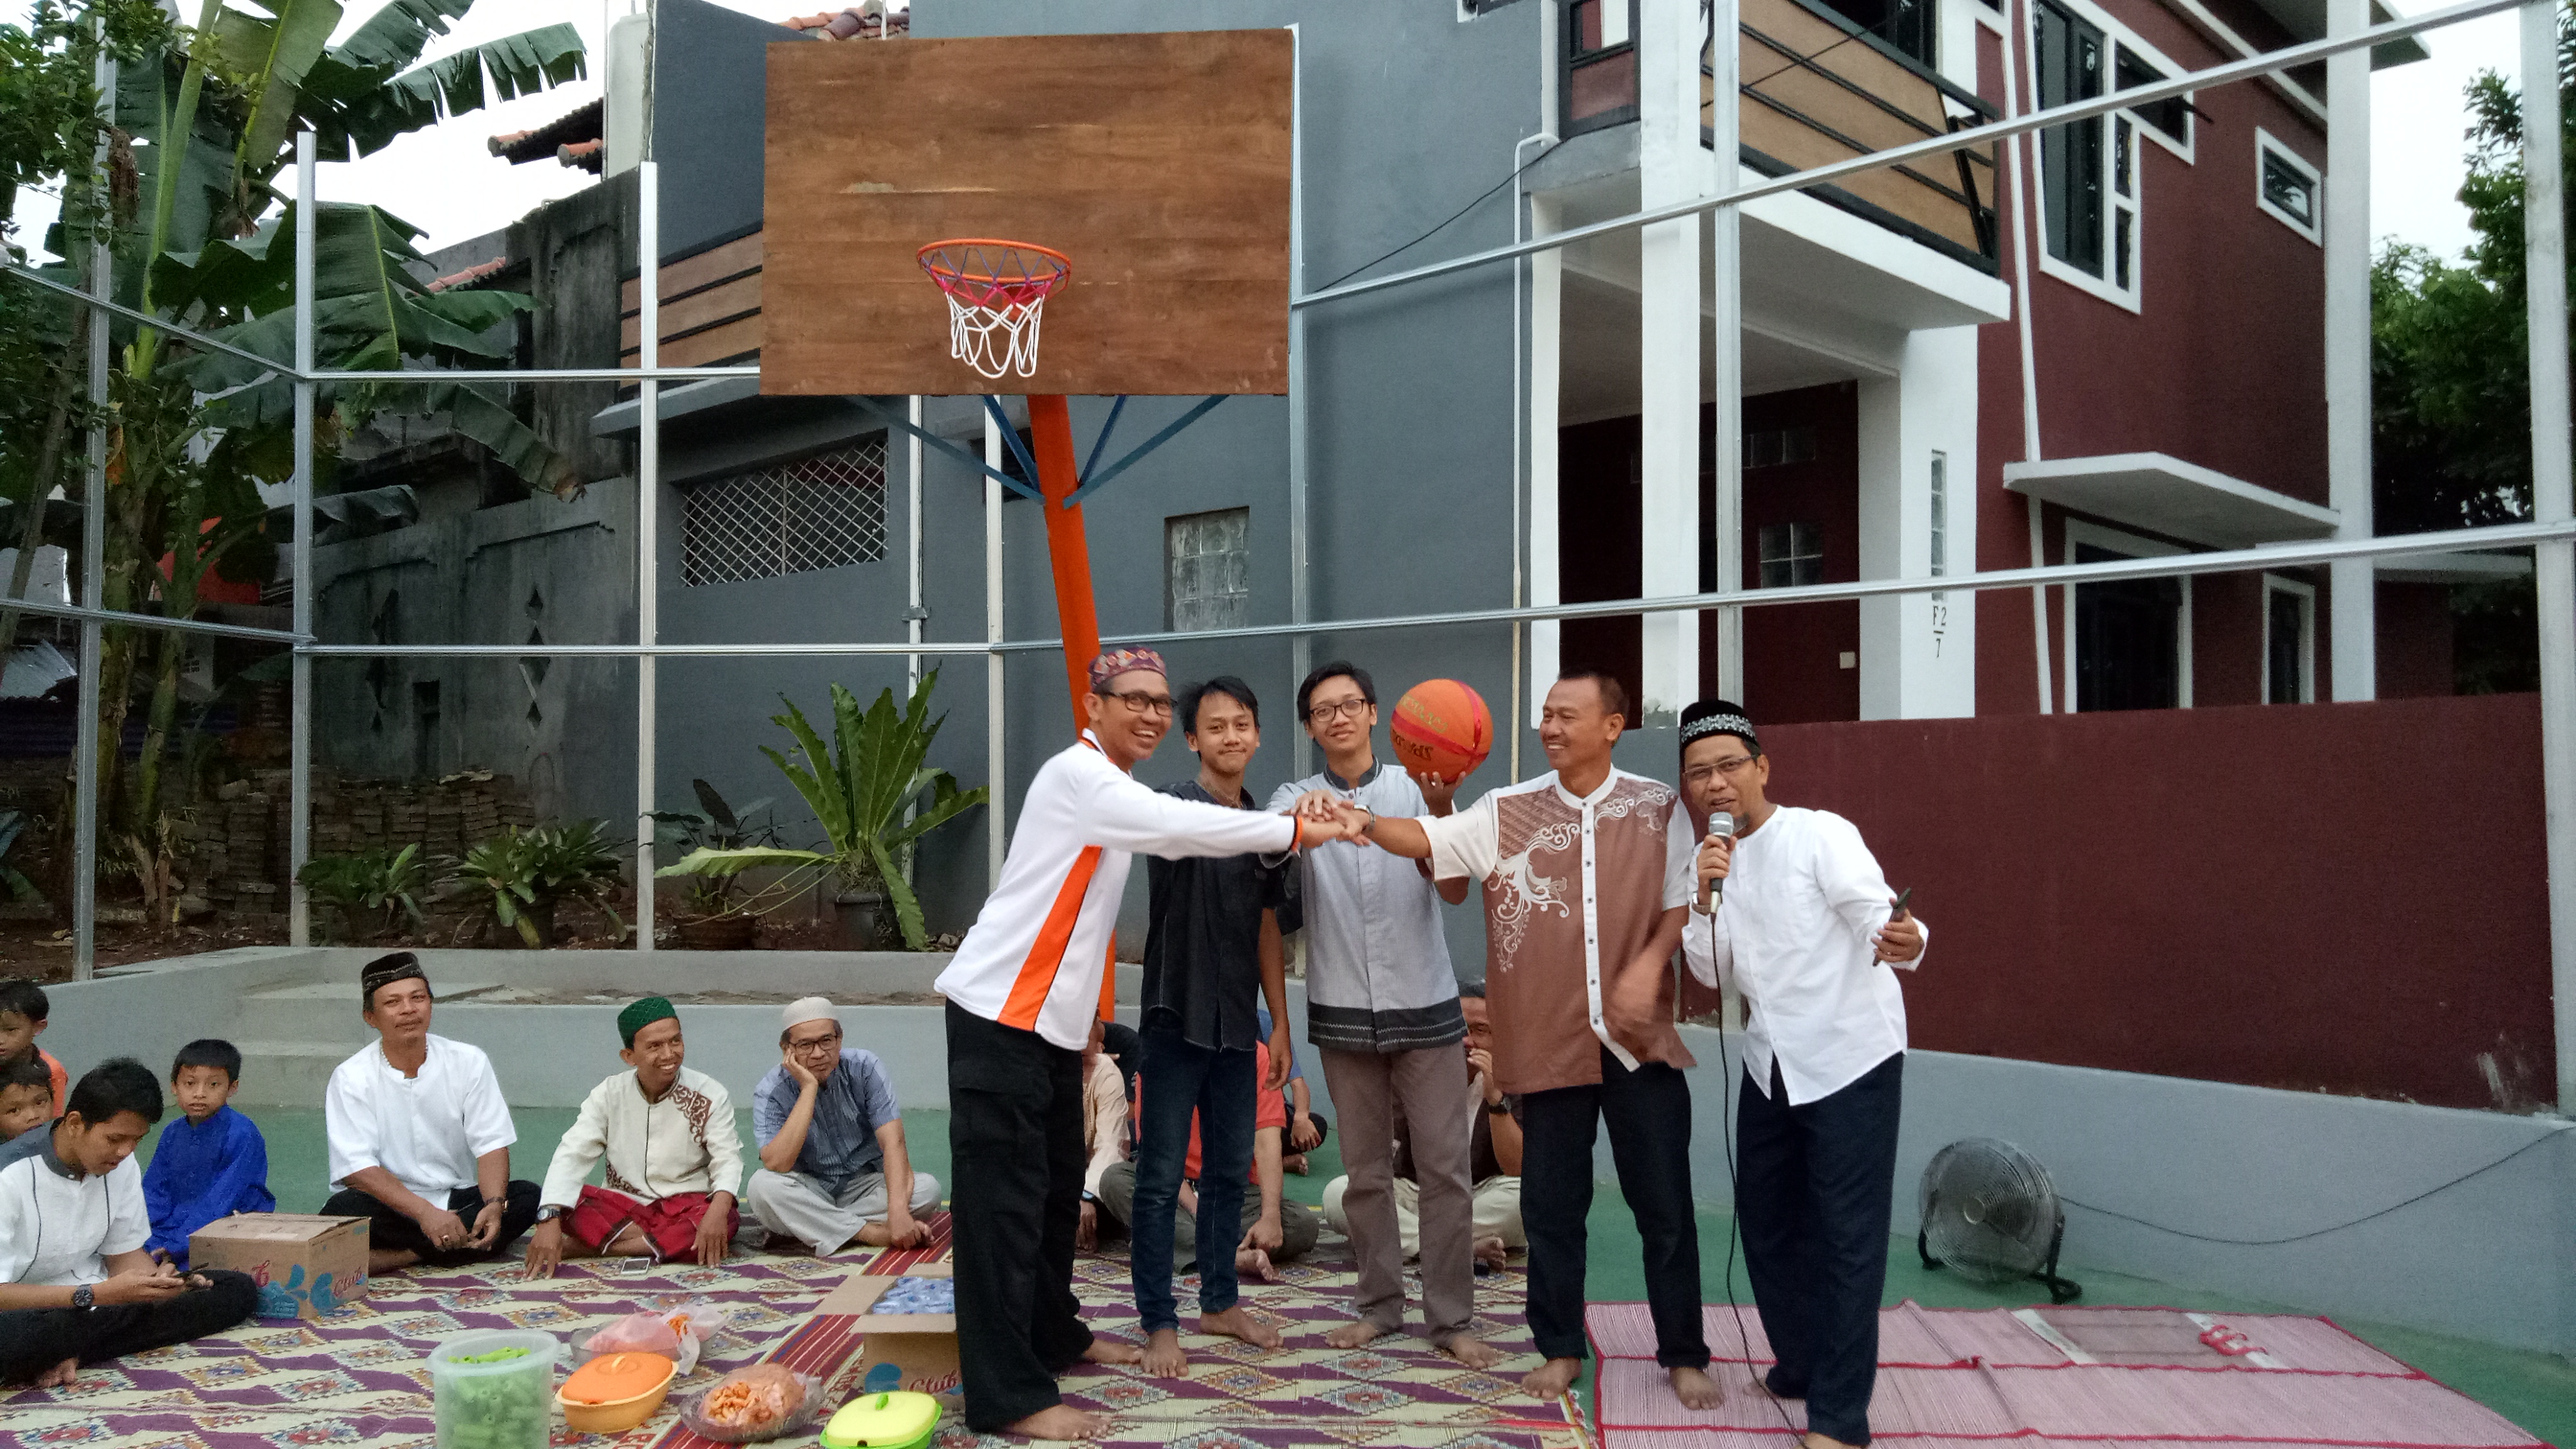 Penyerahan bola basket menandai peresmian lapangan basket di RT 01/11 Perumahan Bukit Rivaria Sawangan Depok. 